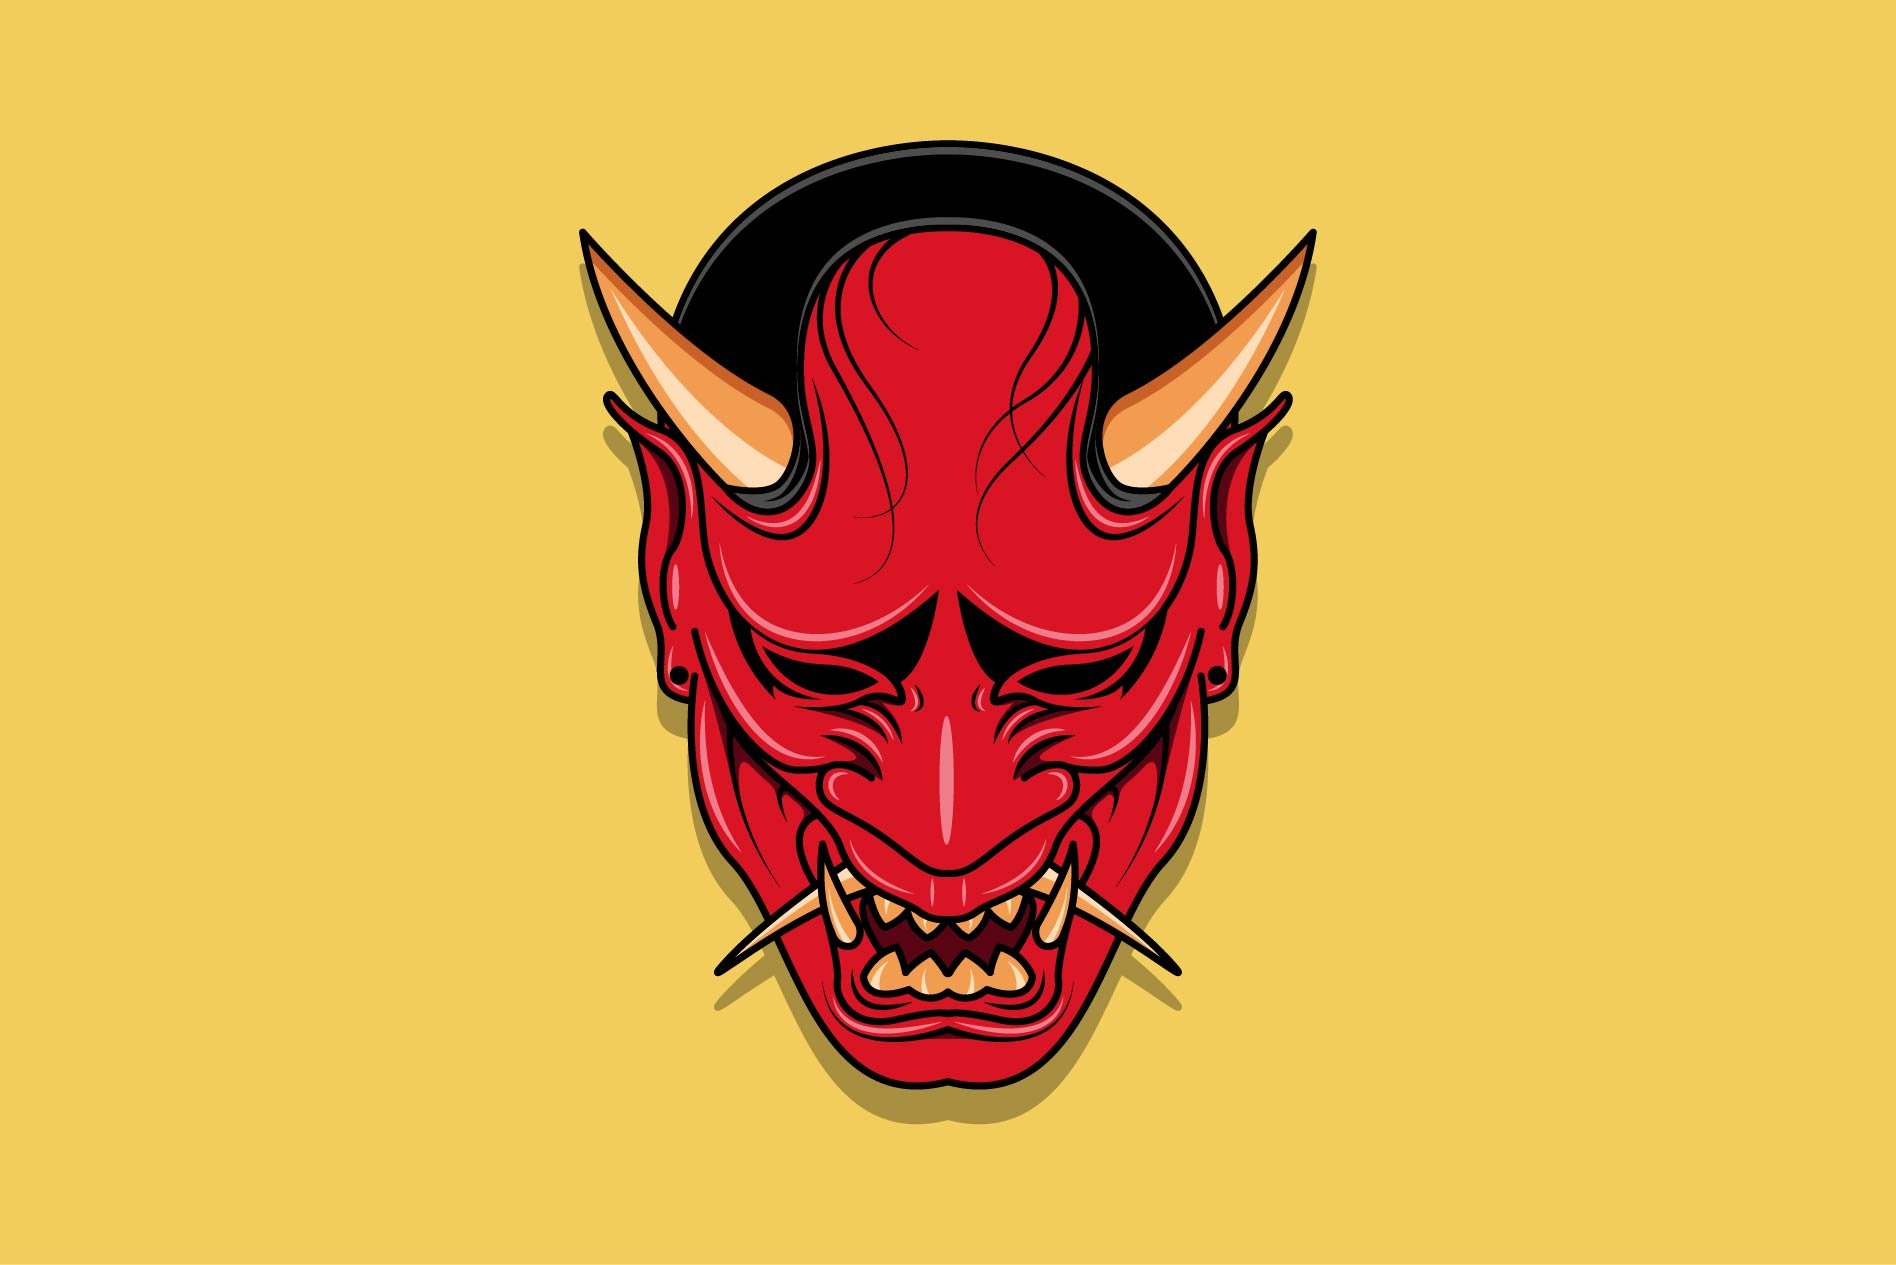 Oni japanese devil mask #09 cover image.